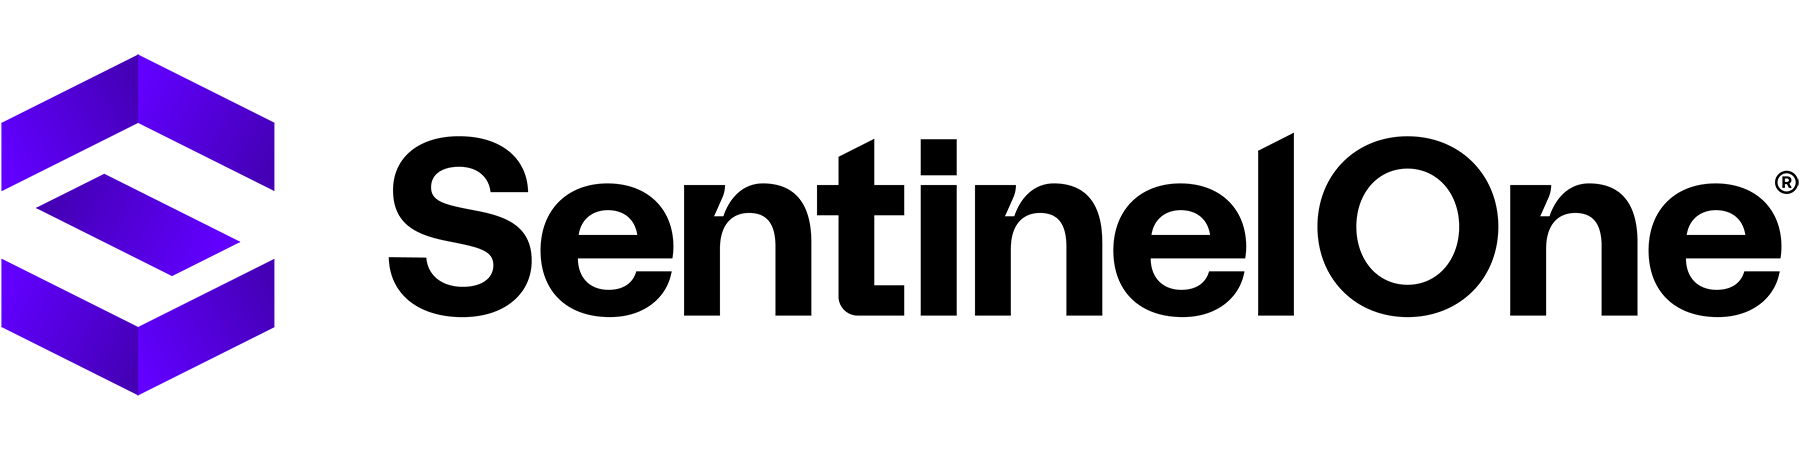 Mkto_SentinelOne_Logo.png